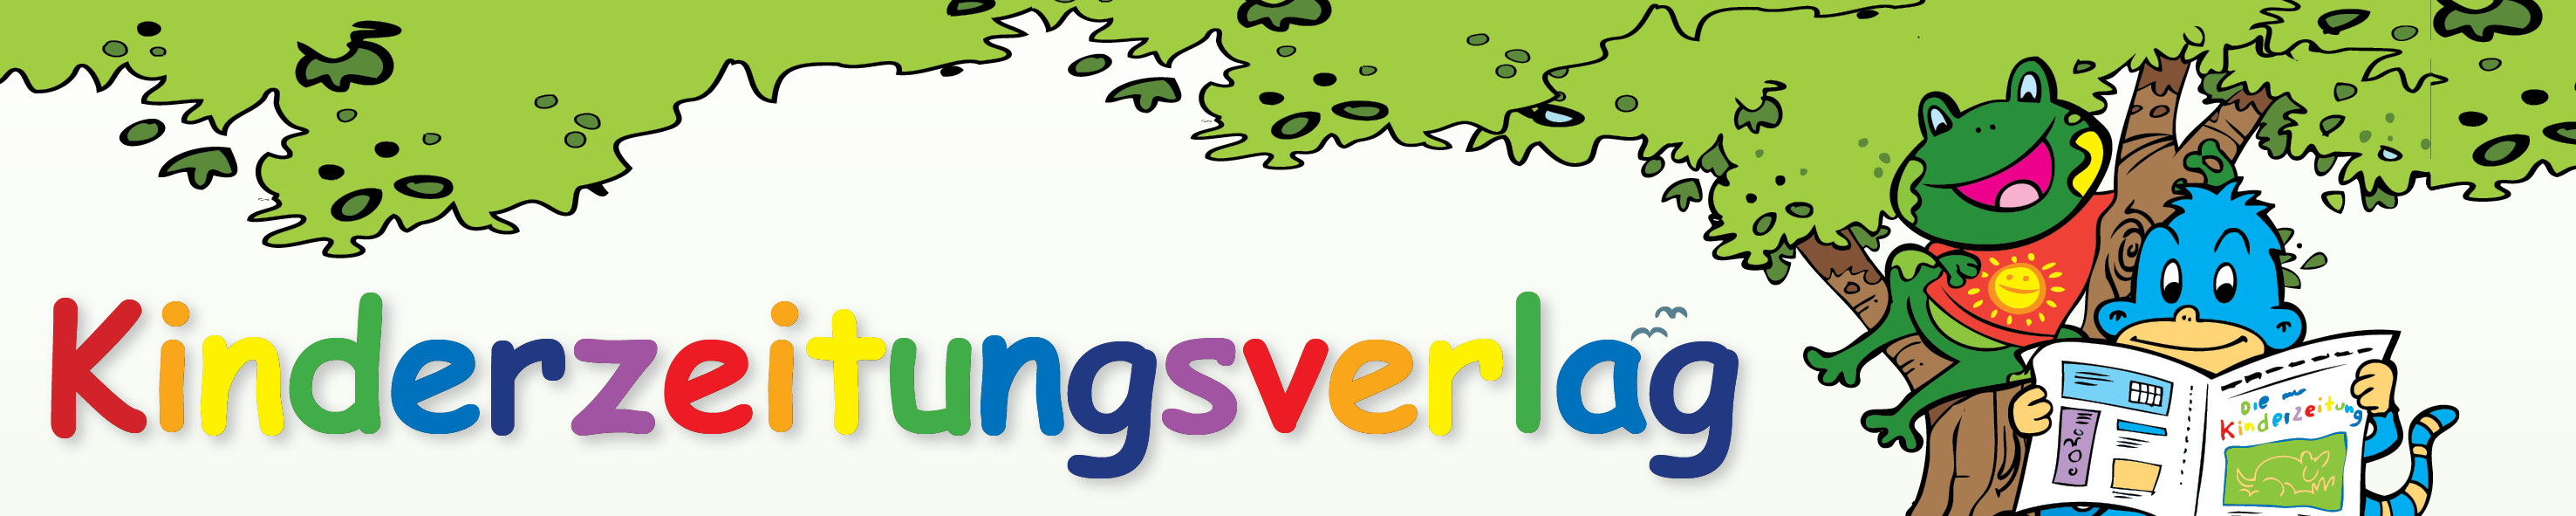 Kinderzeitungsverlag-Logo